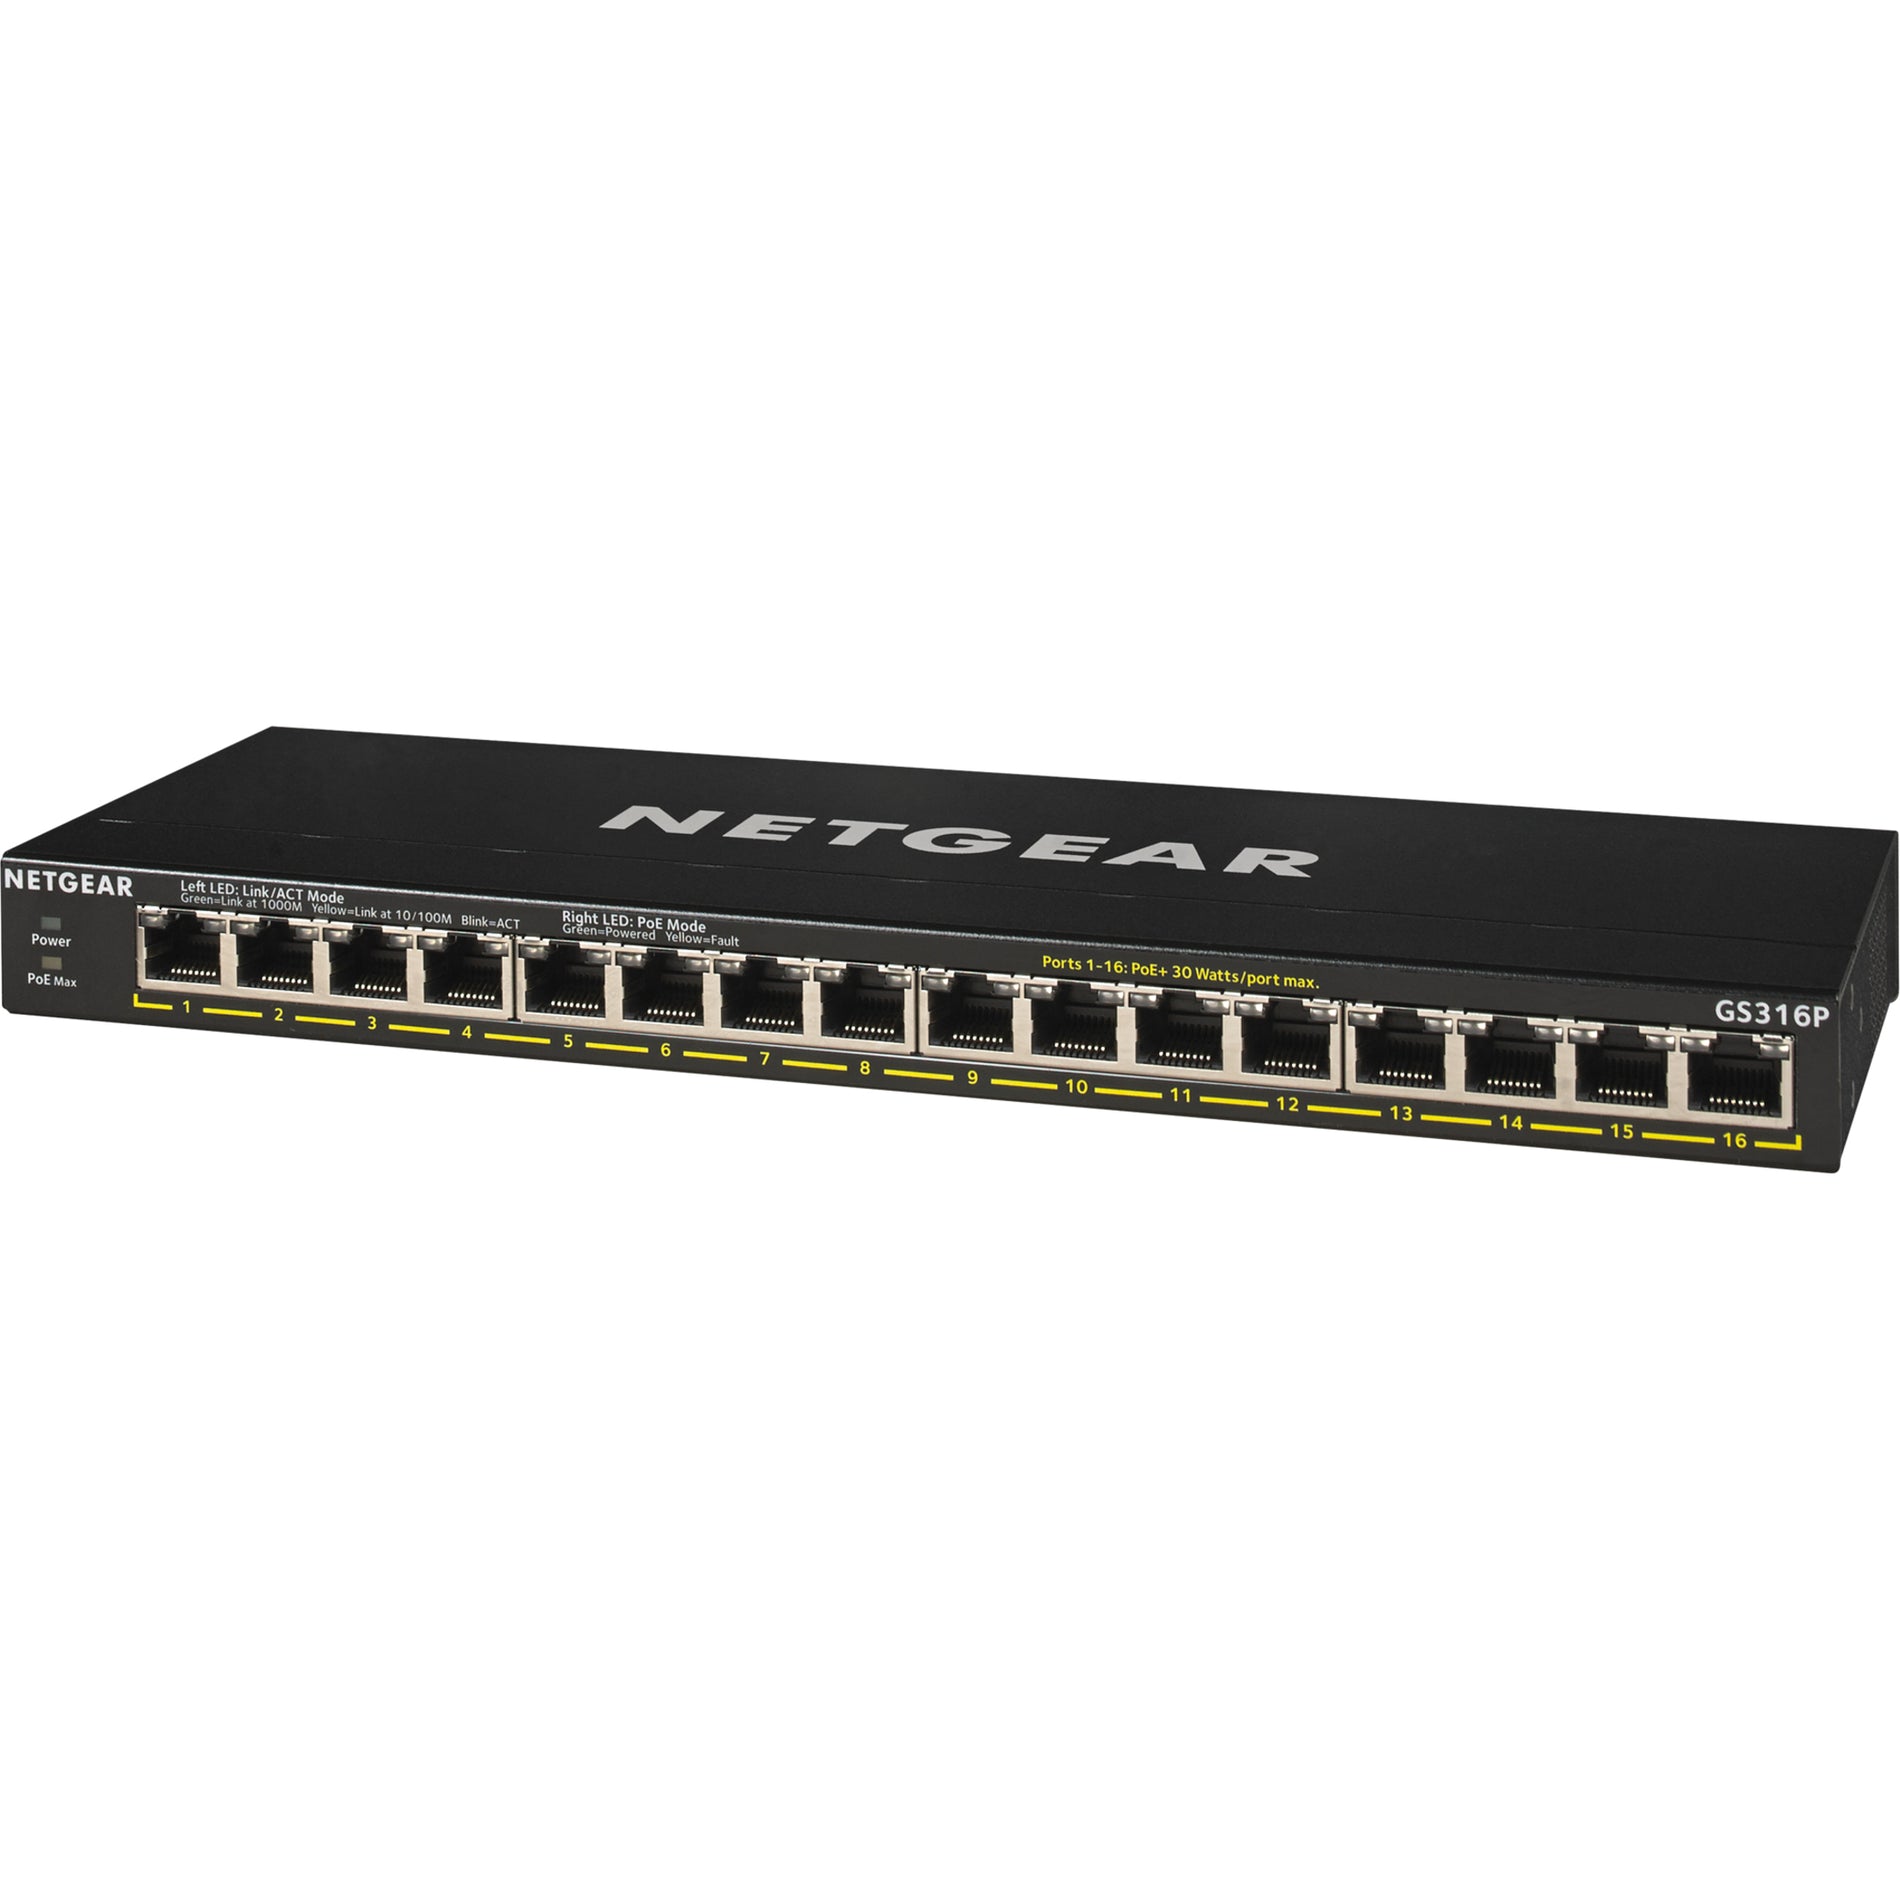 Netgear GS316P-100NAS GS316P Ethernet Switch, 16 Port Gigabit Ethernet PoE+, 3 Year Lifetime Warranty